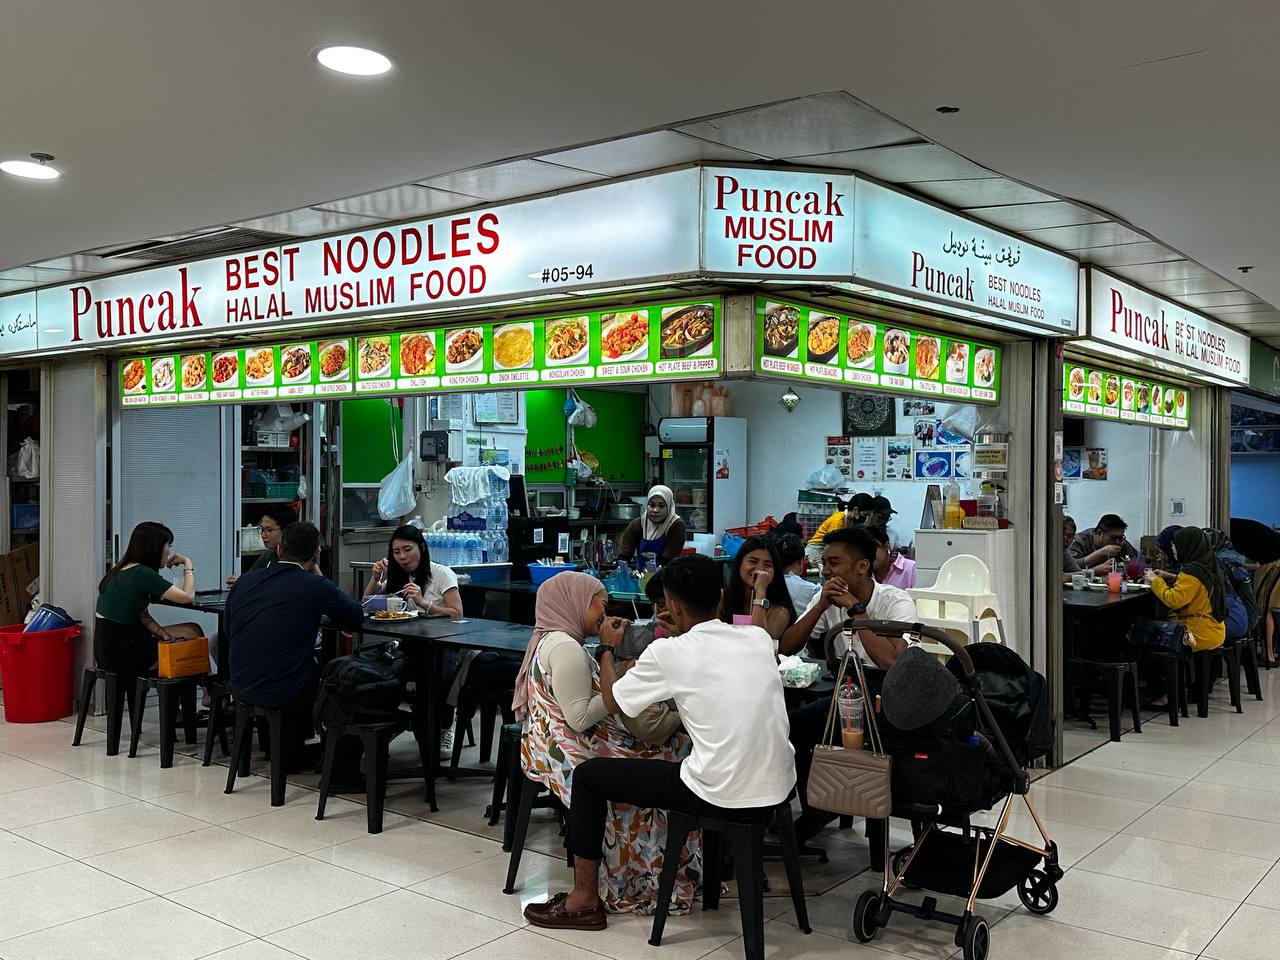 Far East Plaza - Puncak Best Noodles Halal Muslim Food